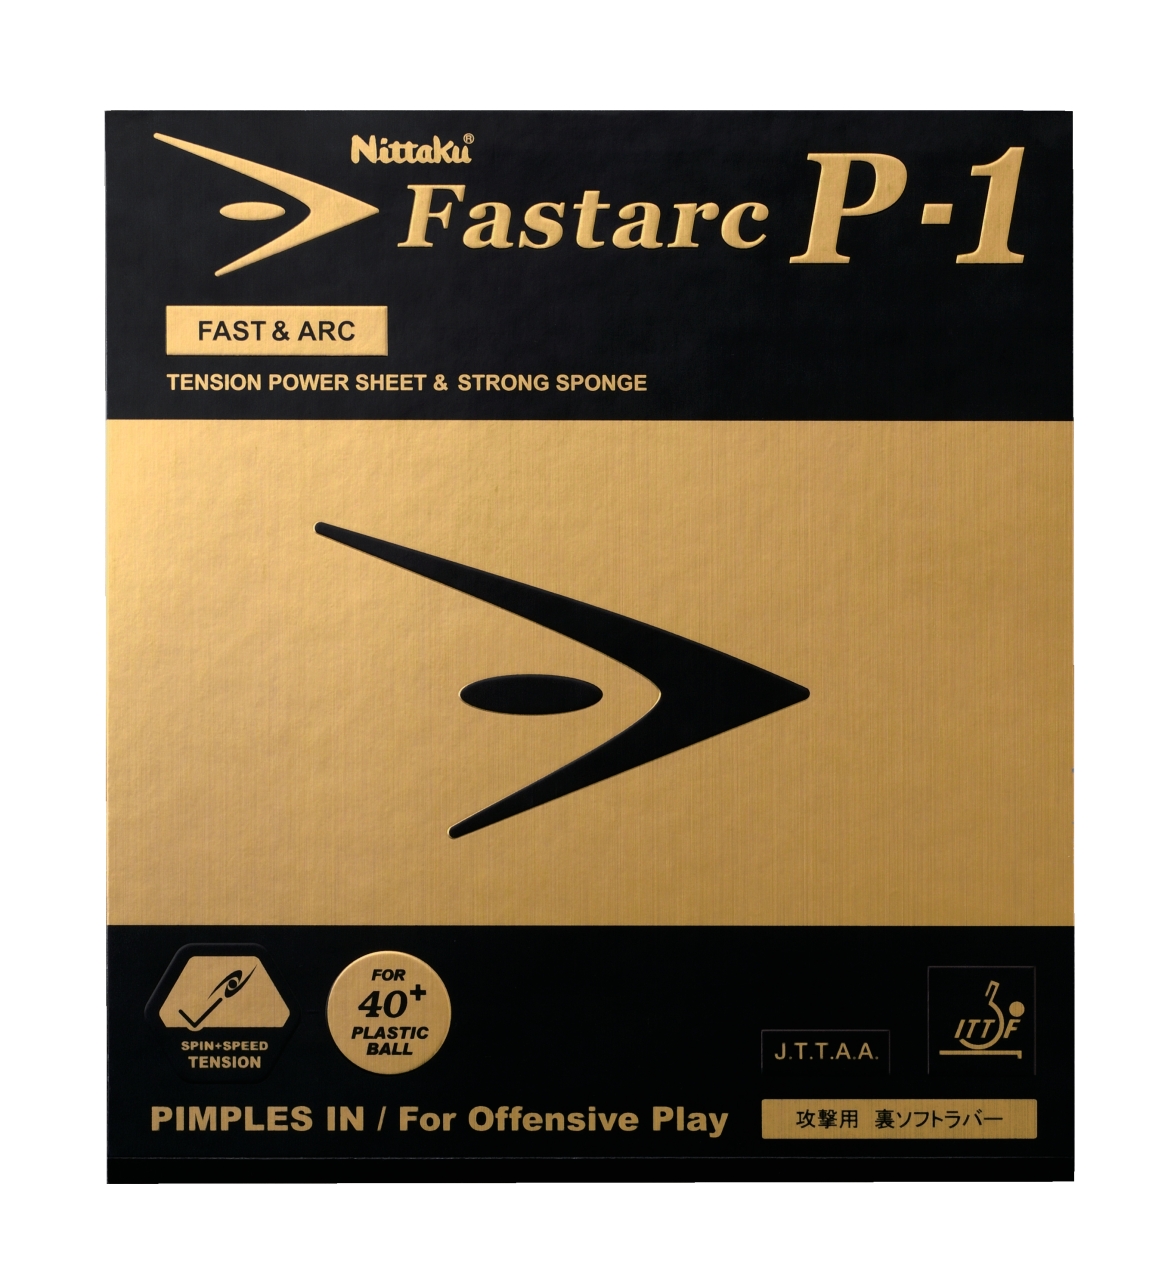 FASTARC P1